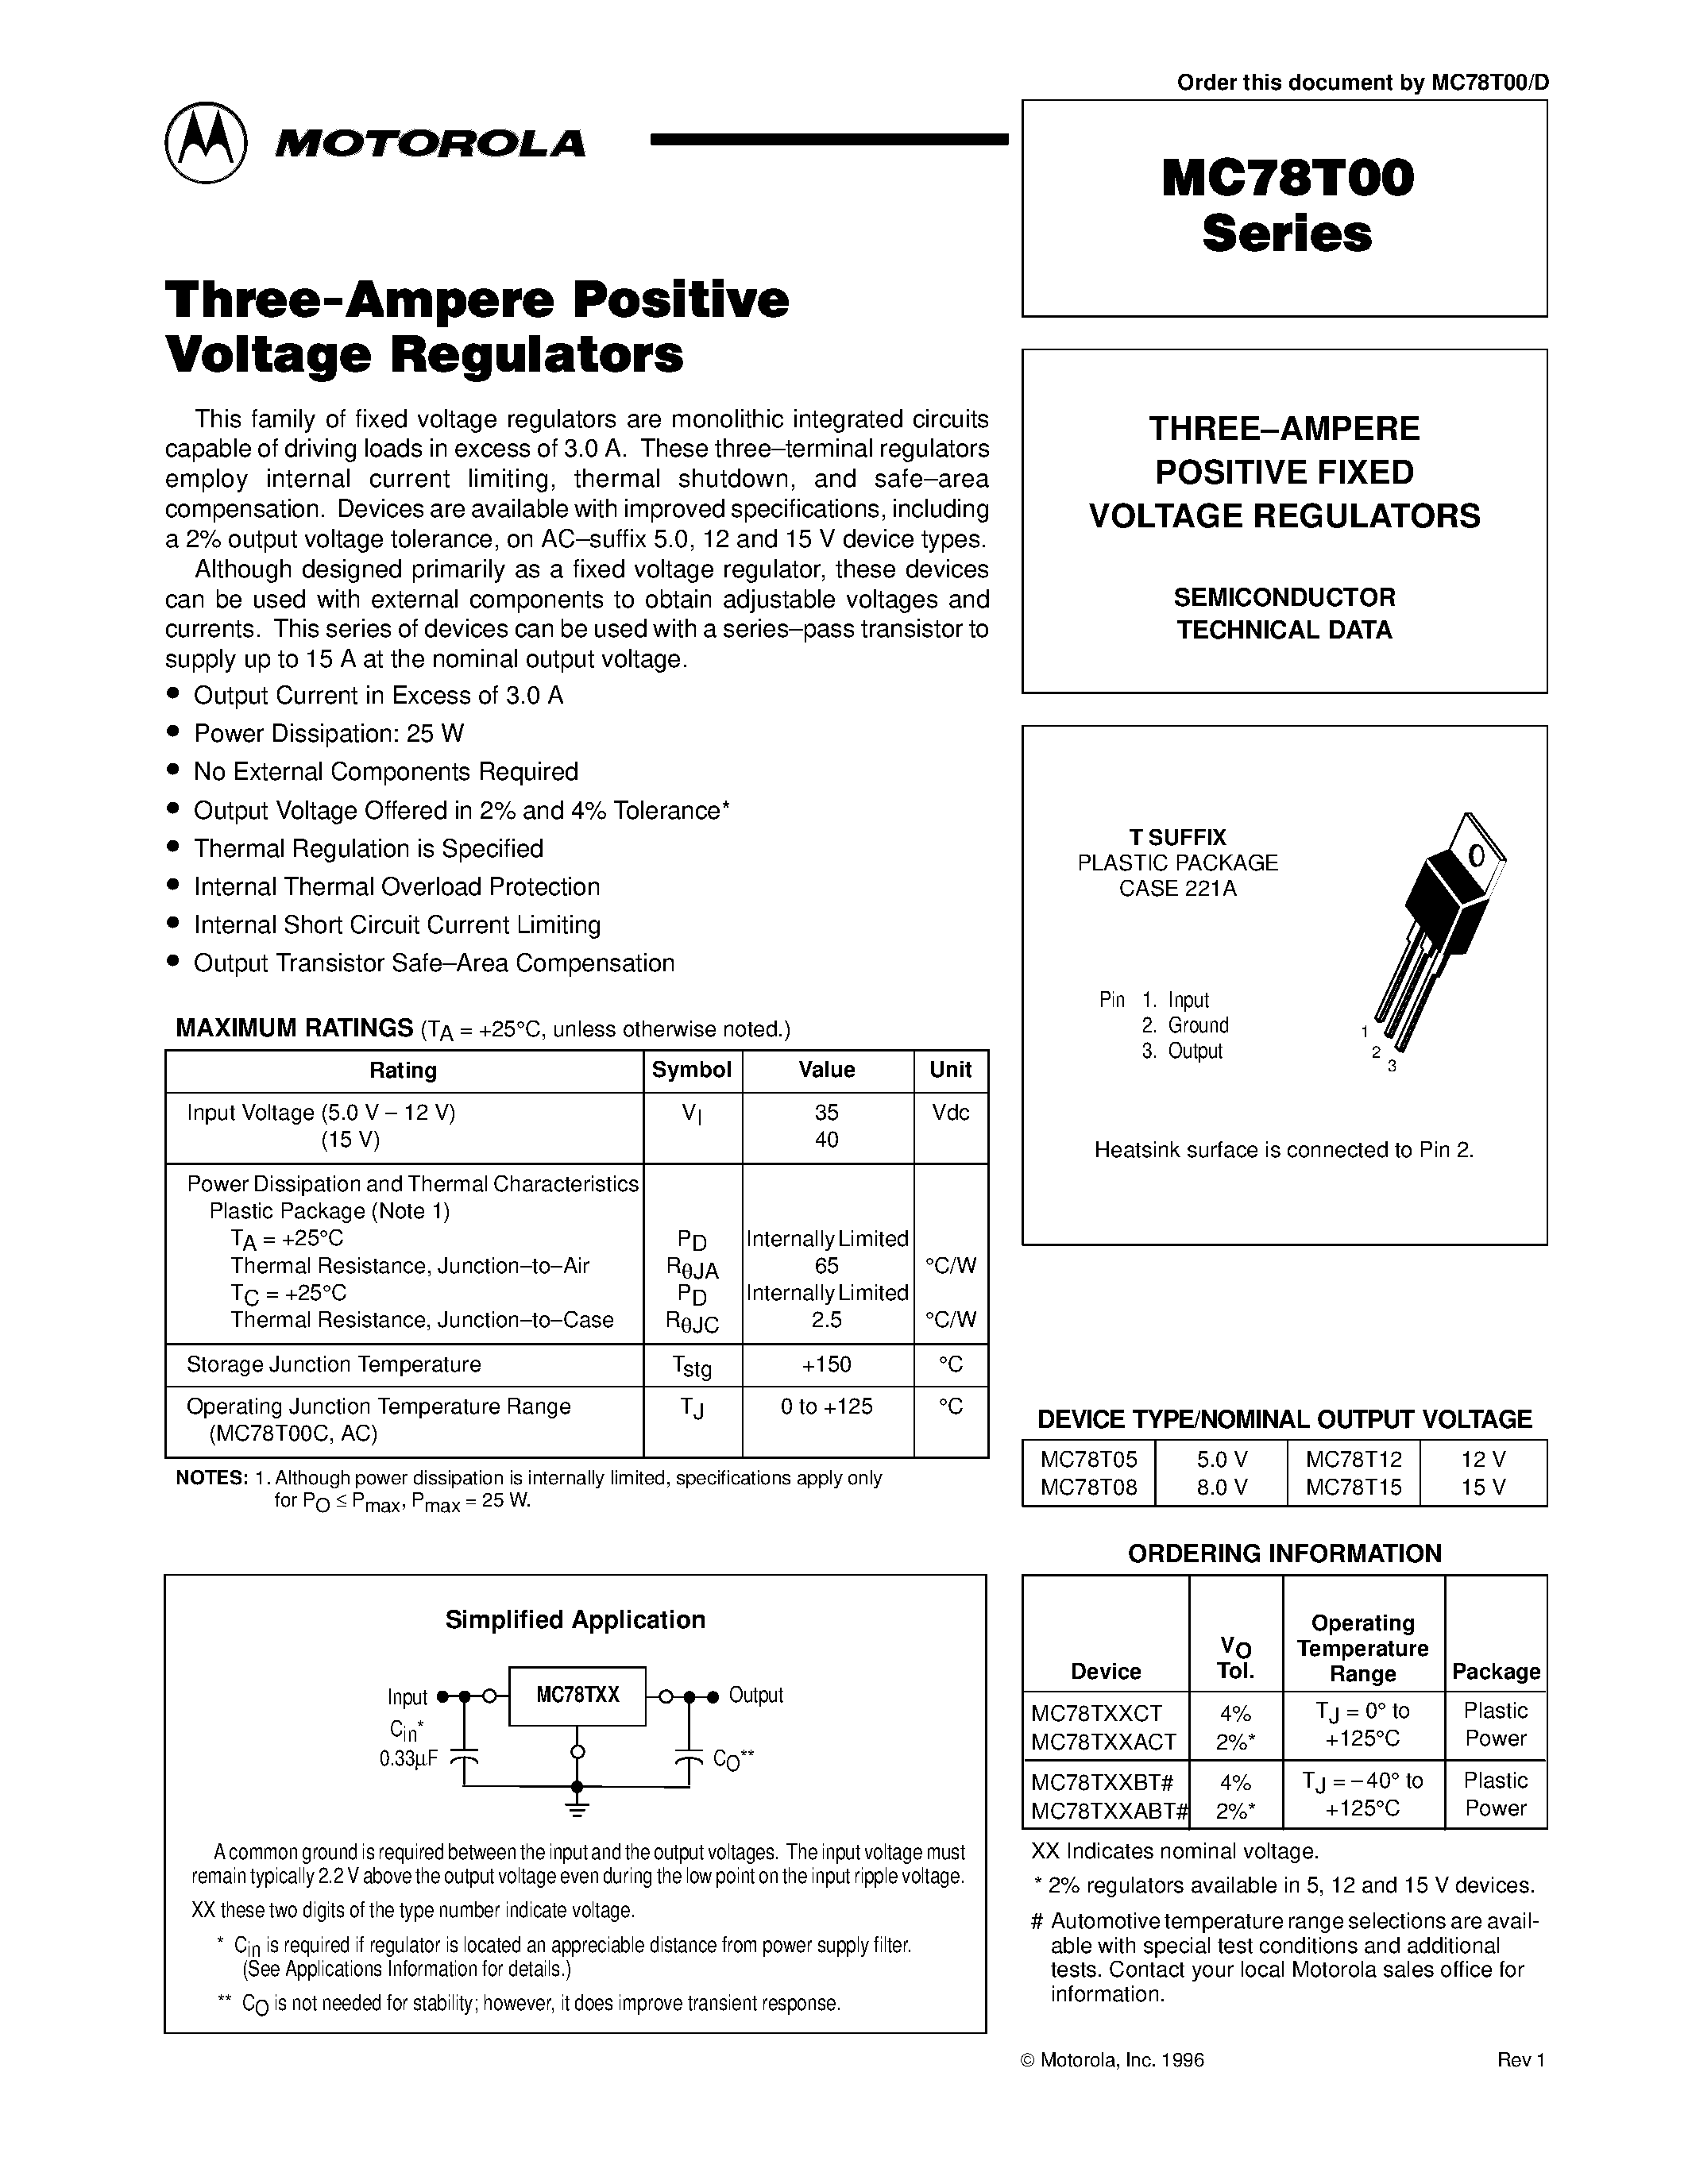 Даташит MC78T15C - THREE-AMPERE POSITIVE FIXED VOLTAGE REGULATORS страница 1